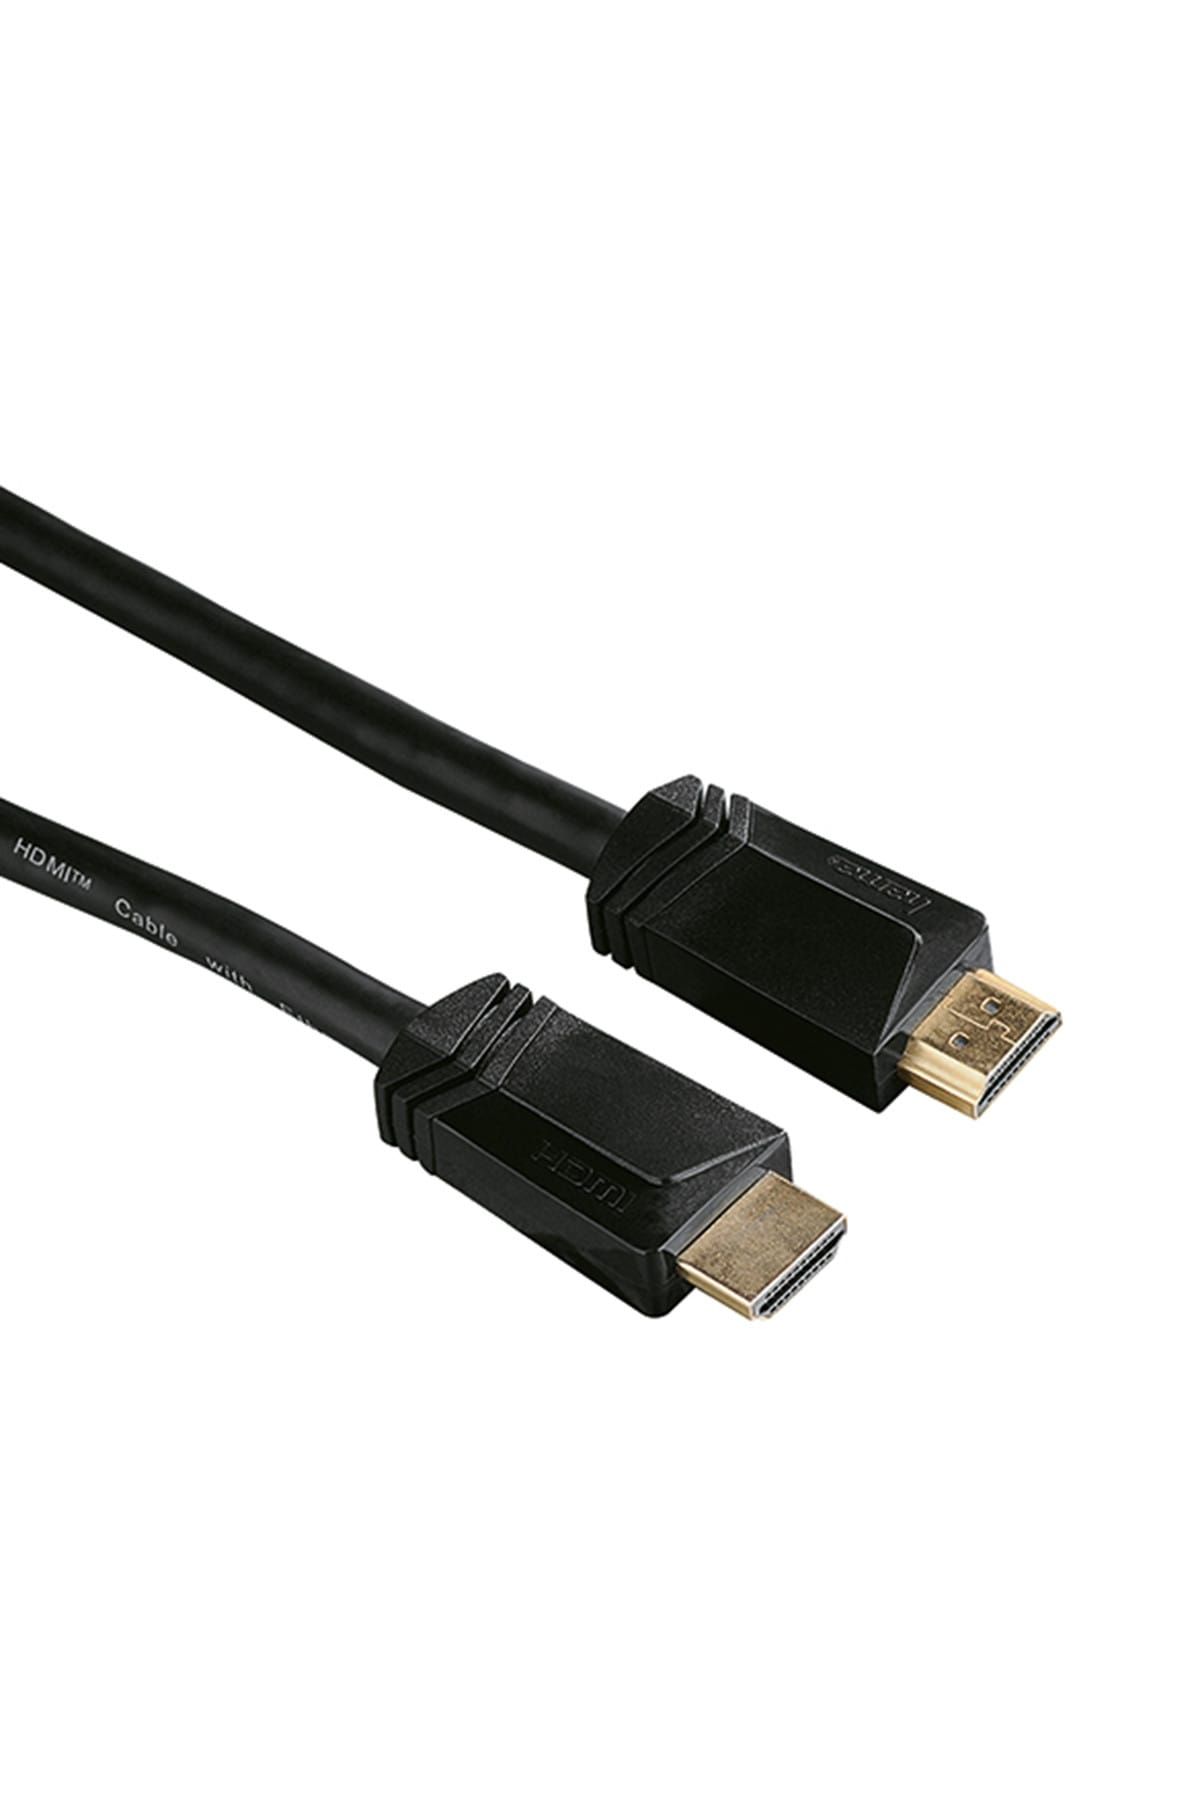 Hama HS Ethernet Altın Uç 4K Siyah 3S 43221 m HDMI hm-122104